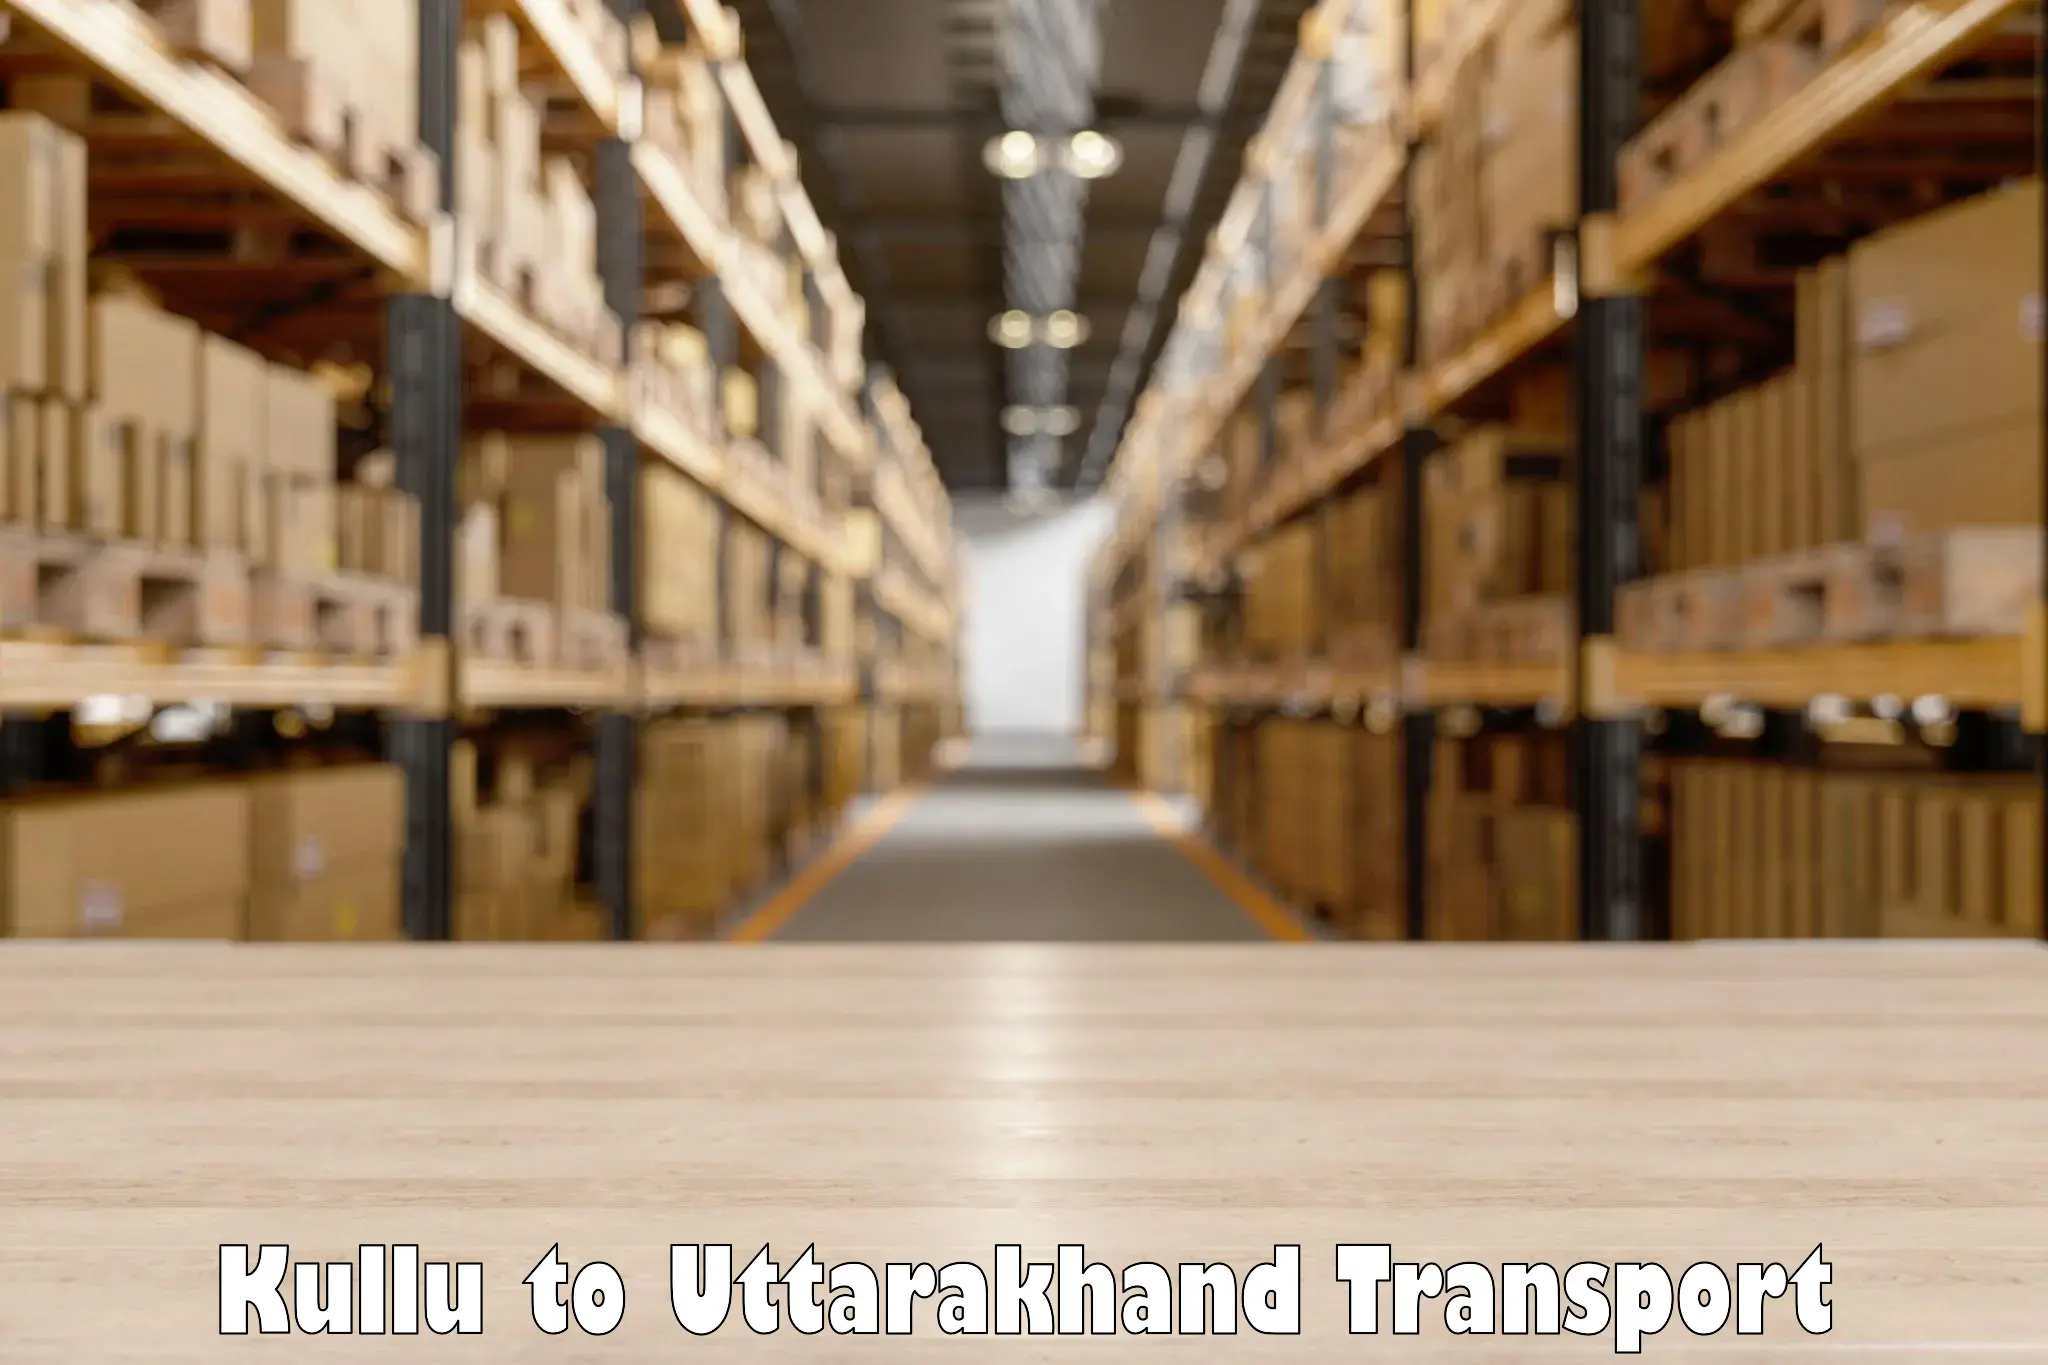 Container transport service Kullu to Tehri Garhwal